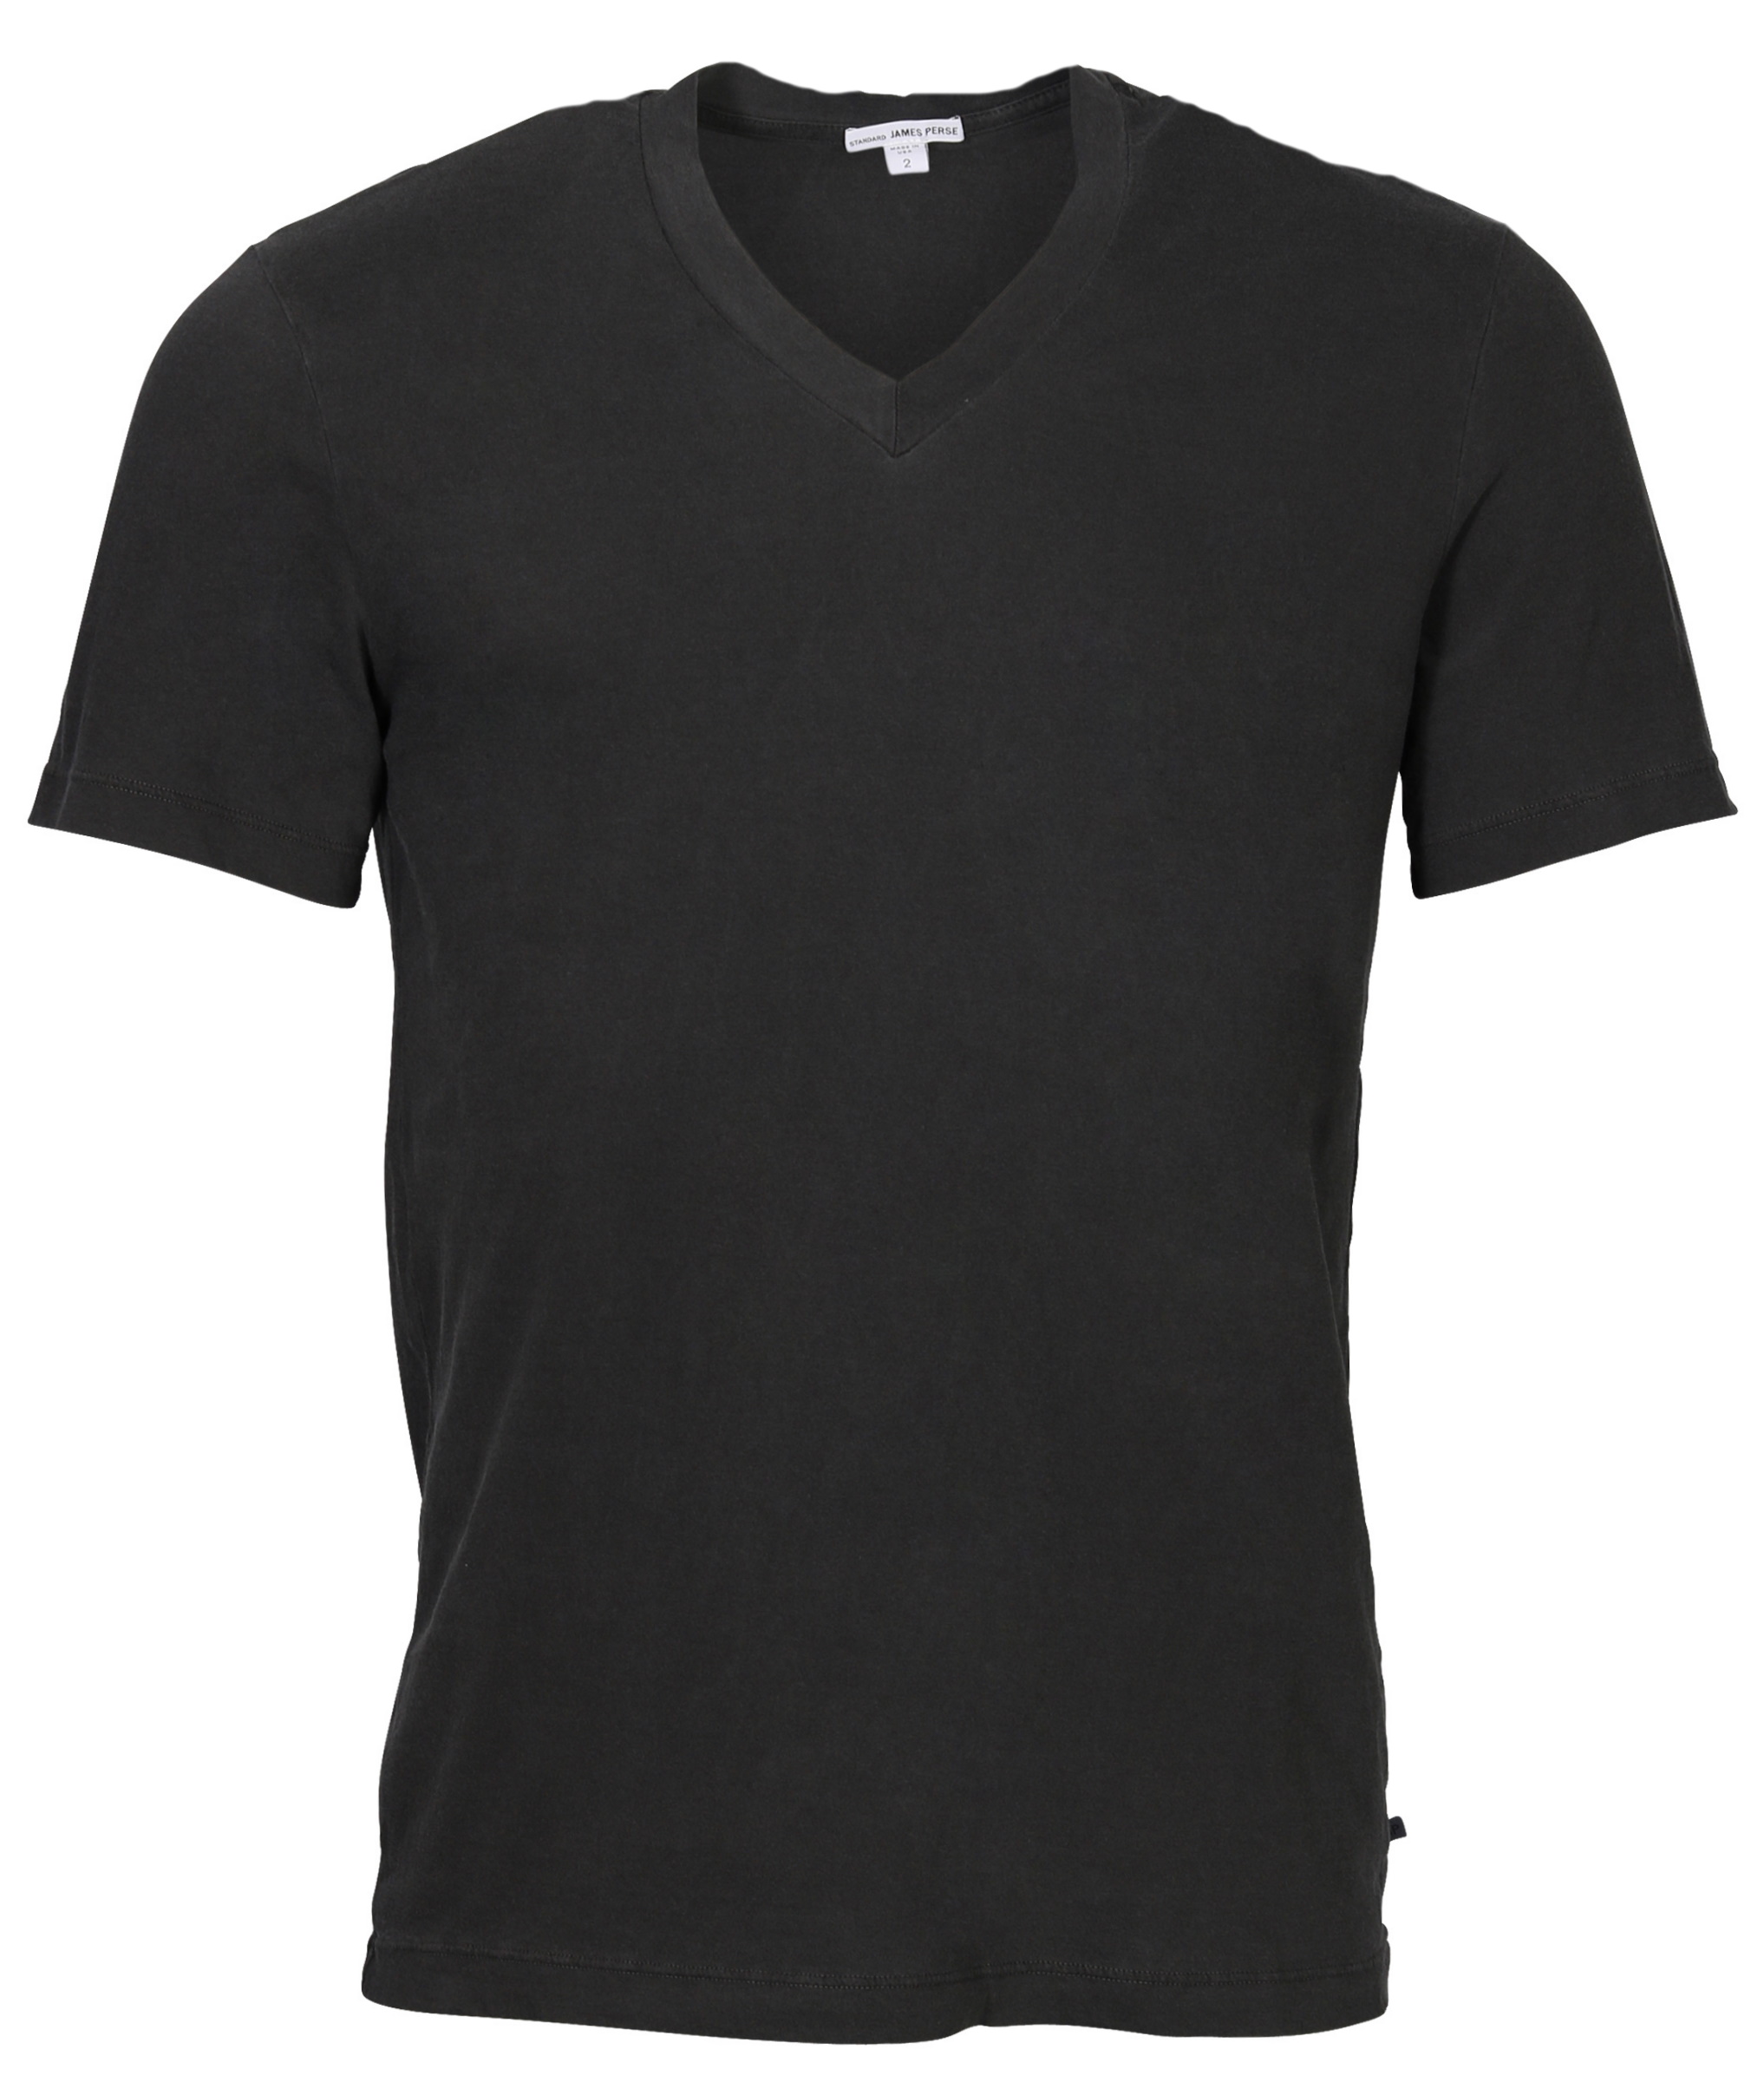 James Perse T-Shirt V-Neck Carbon